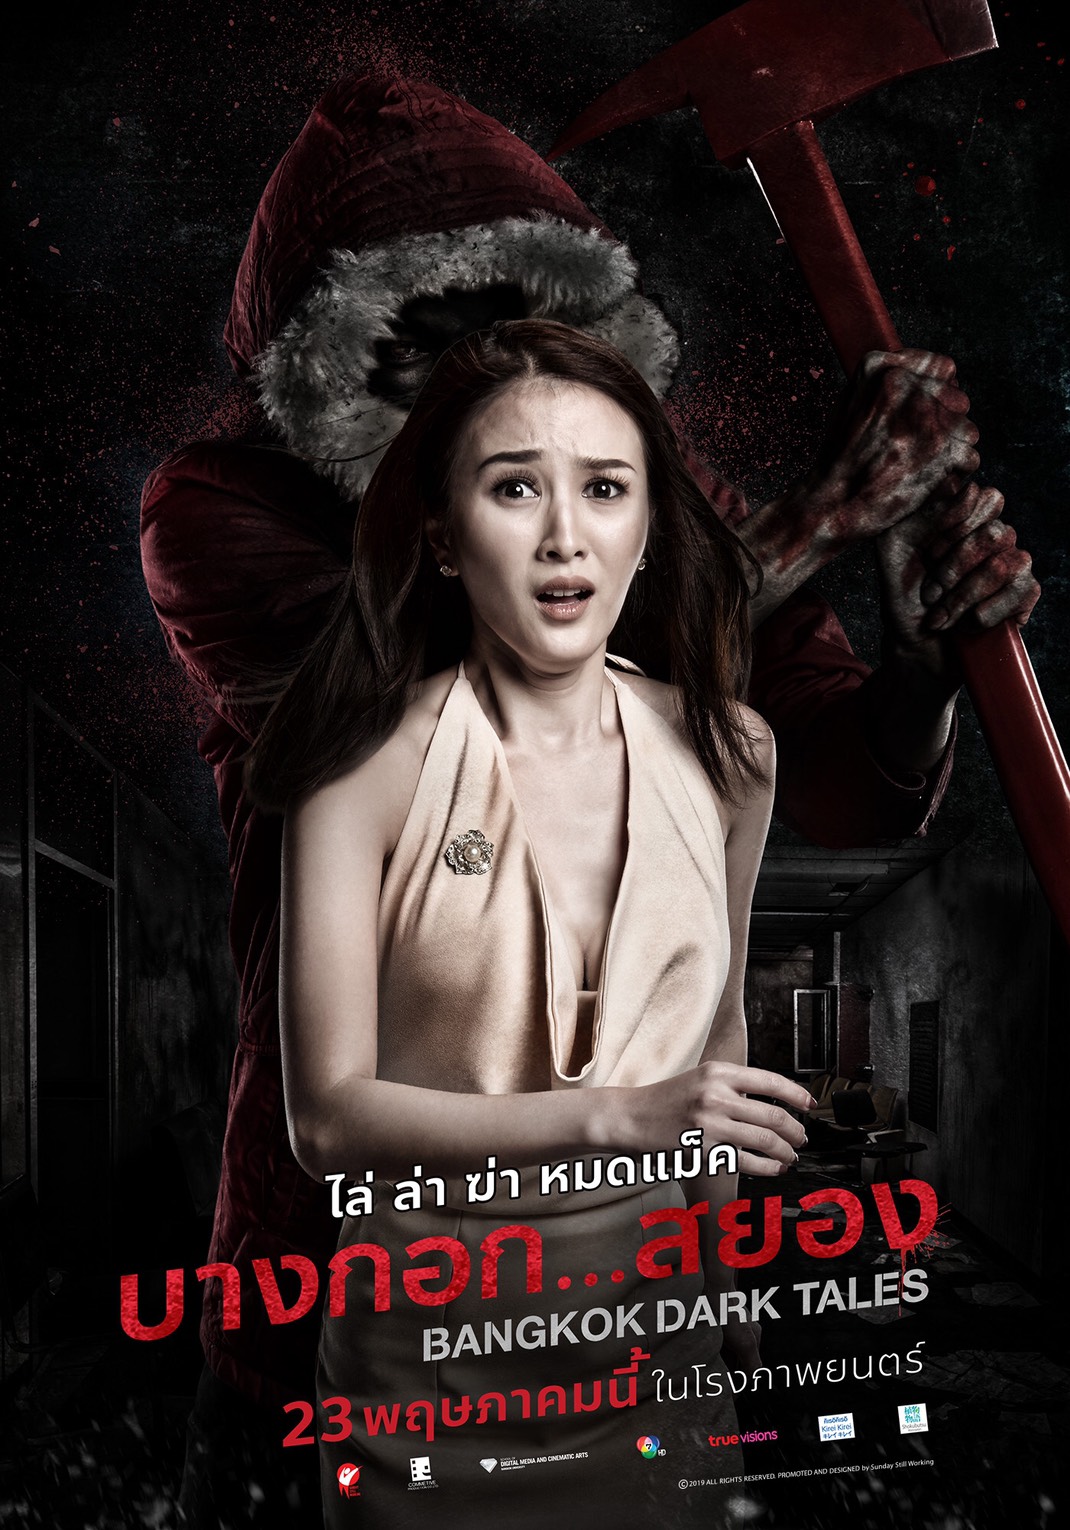 Bangkok Dark Tales (2019) บางกอก…สยอง - ดูหนังออนไลน